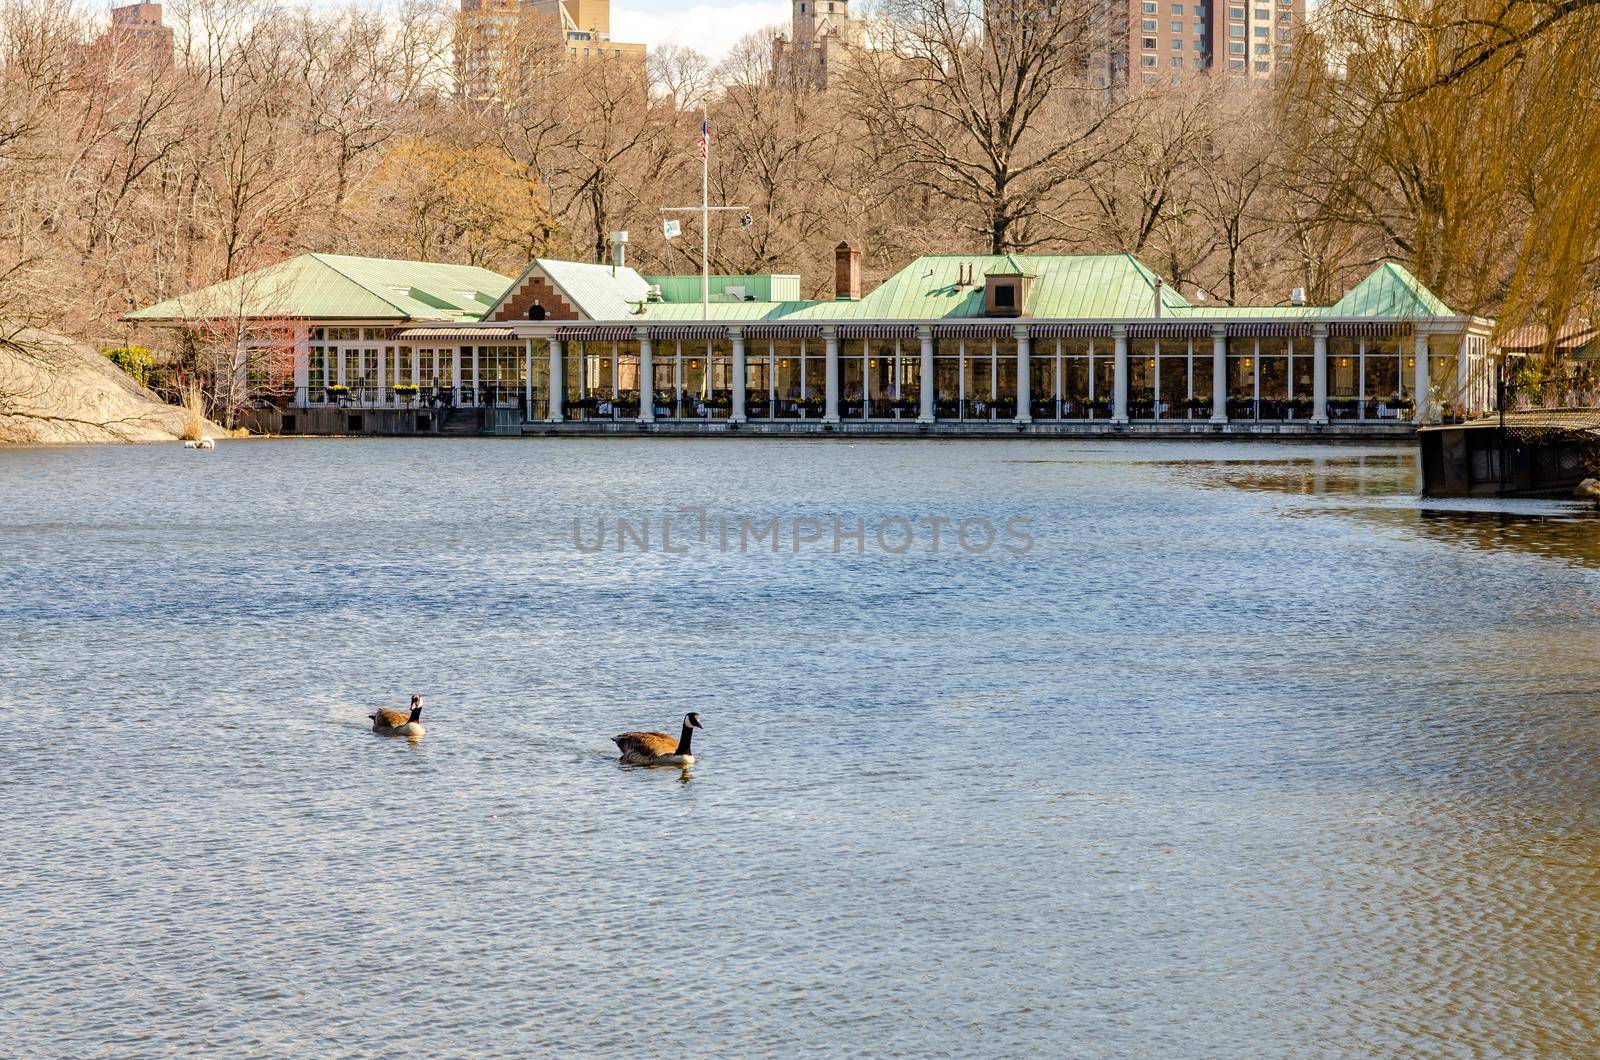 Central Park Boathouse Restaurant, New York City by bildgigant